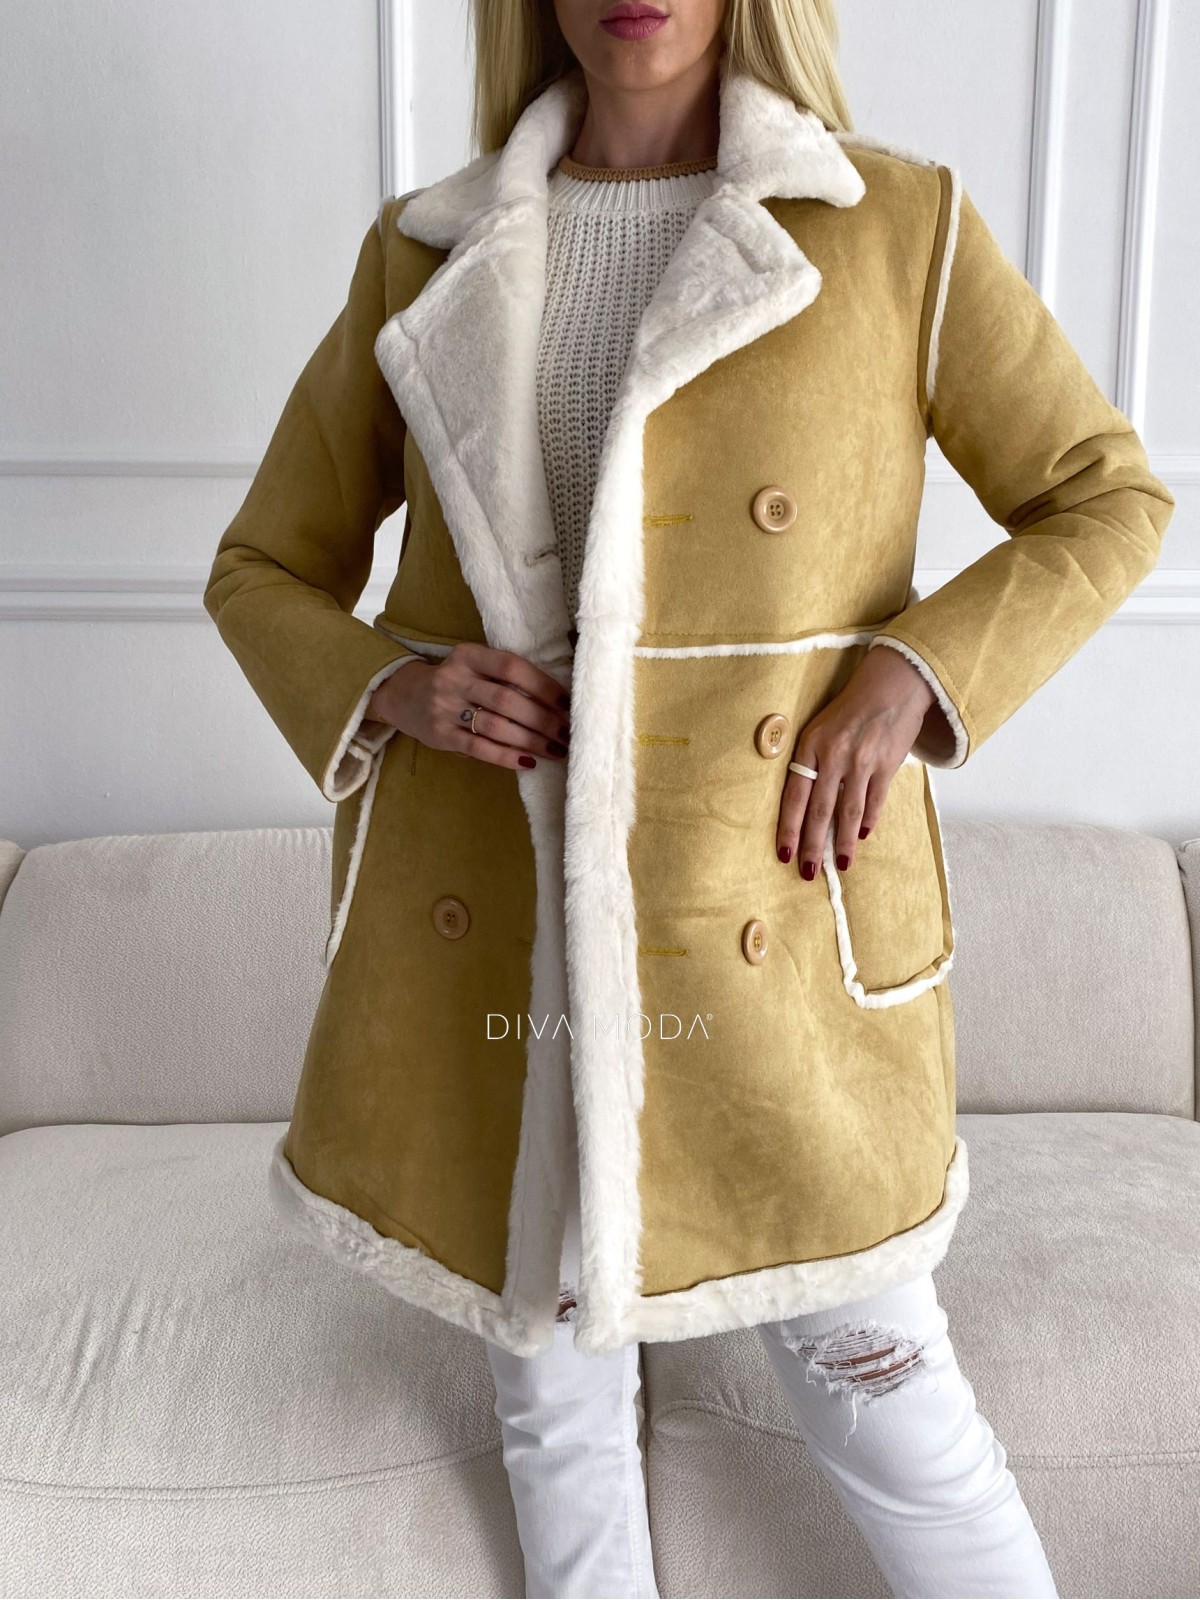 Kožešinový kabát z broušené koženky s dvouřadými knoflíčky hnědý S 85